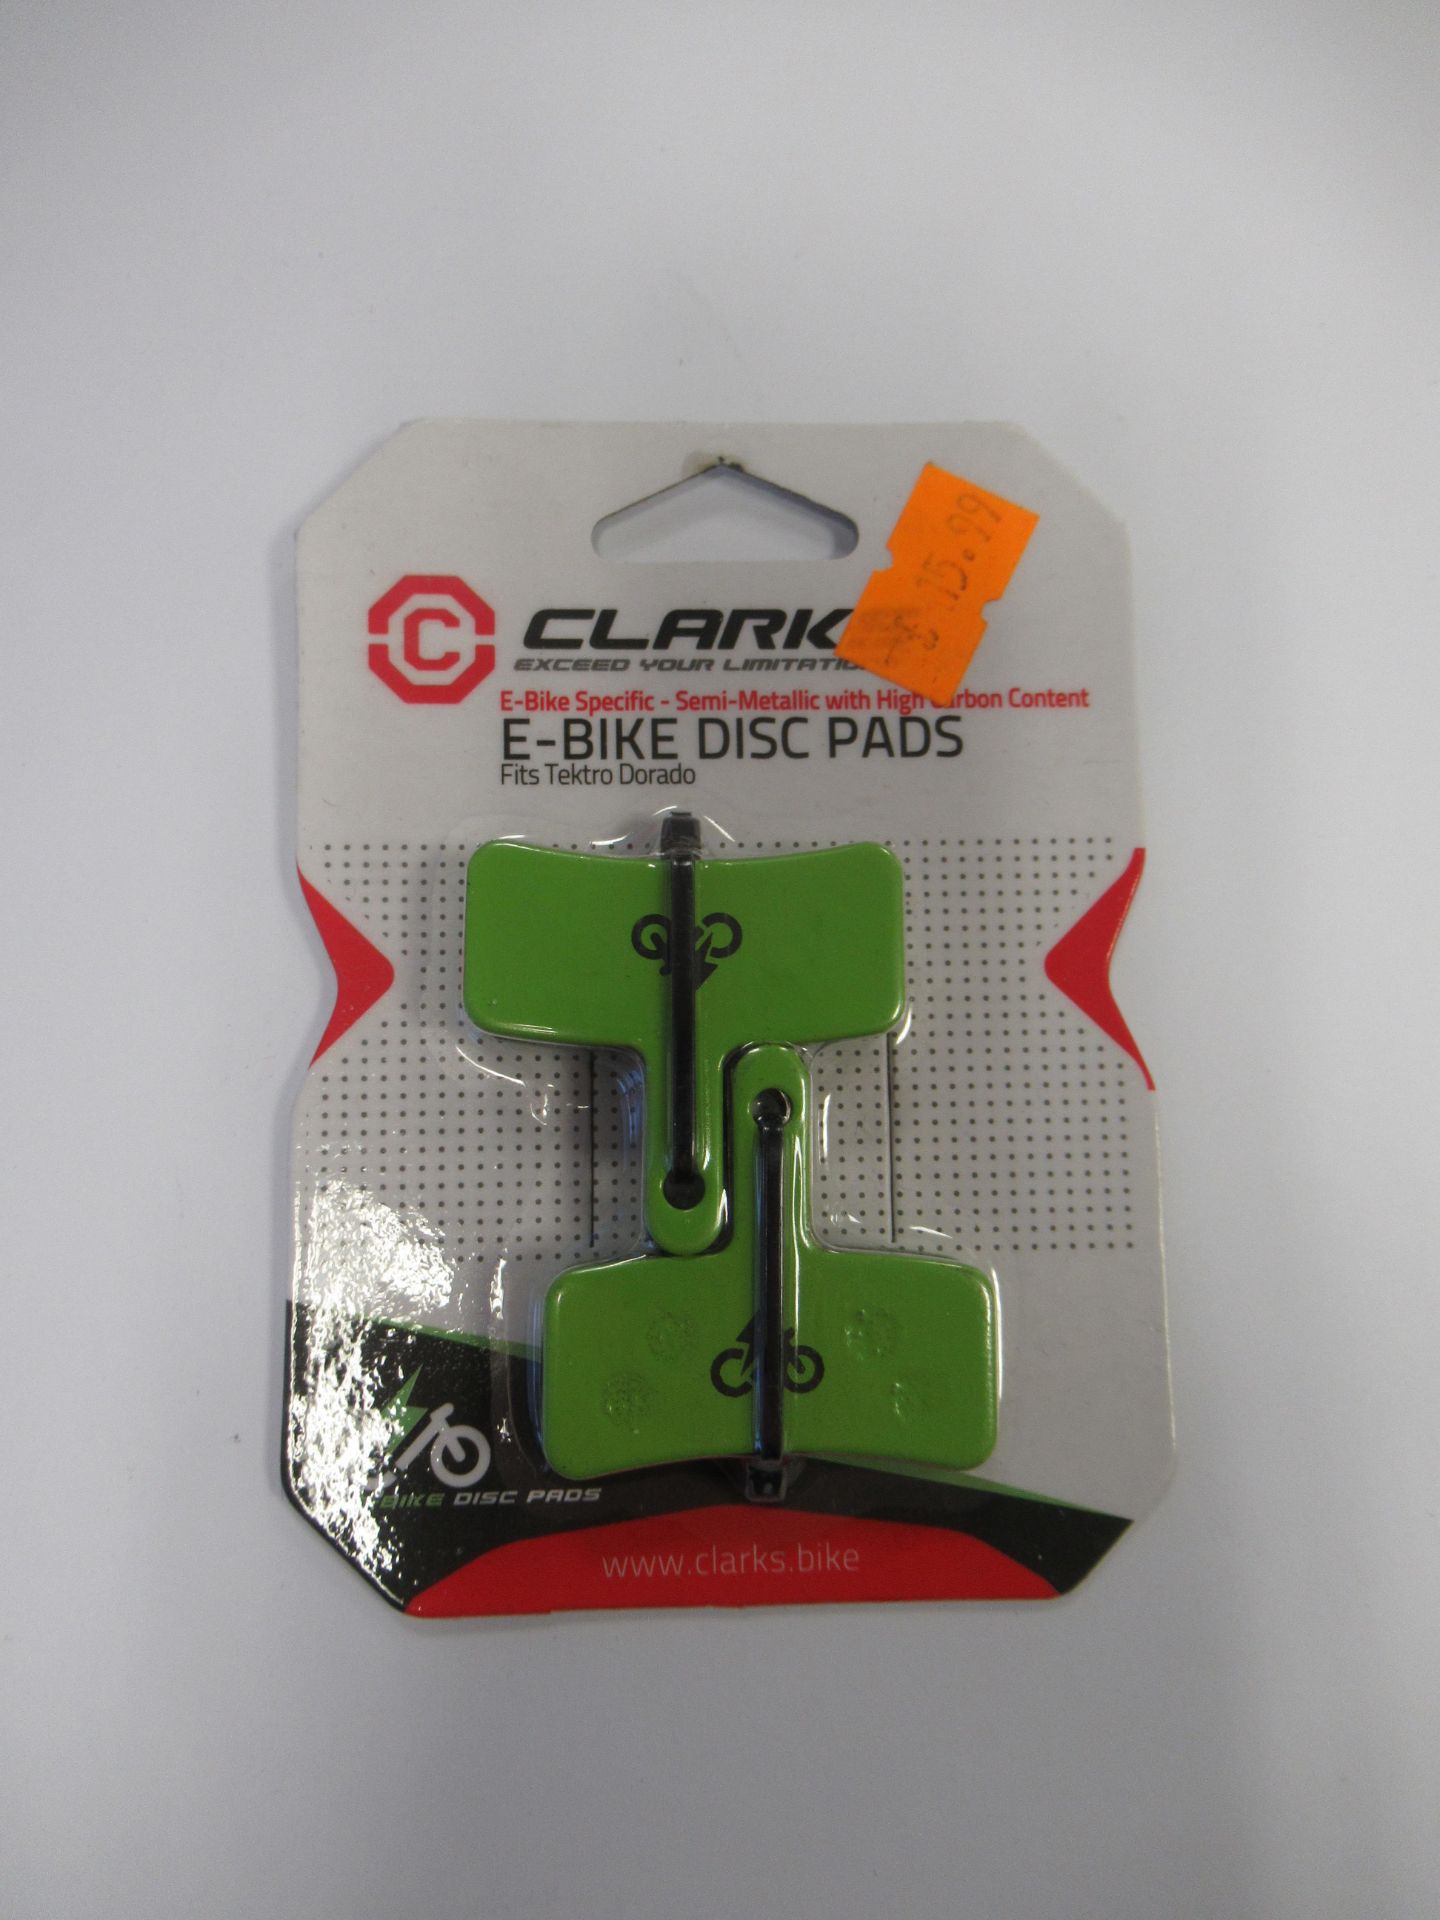 Clarks Disc Pads to include 8x E-bike (fits Tektro Dorado) E-bike specific- Semi-Metallic with High - Image 2 of 11